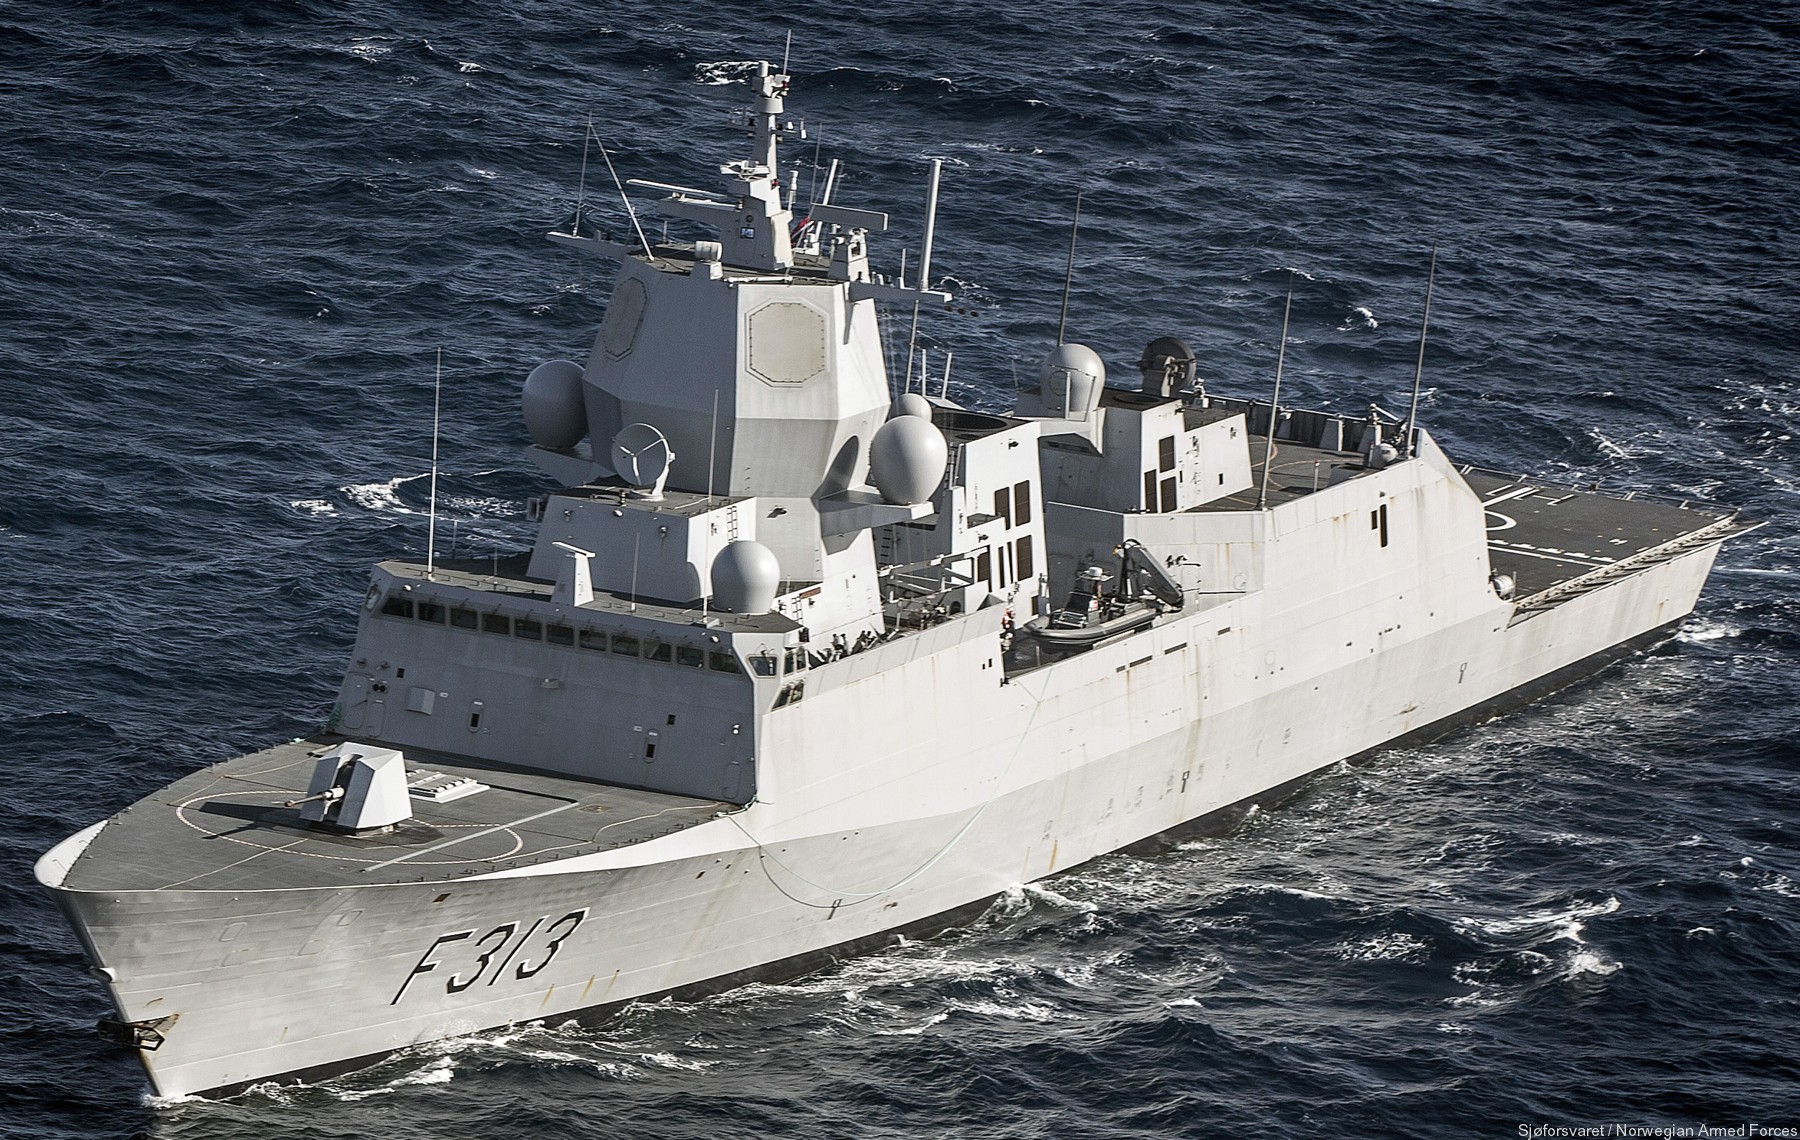 f-313 helge ingstad hnoms knm nansen class frigate royal norwegian navy 33